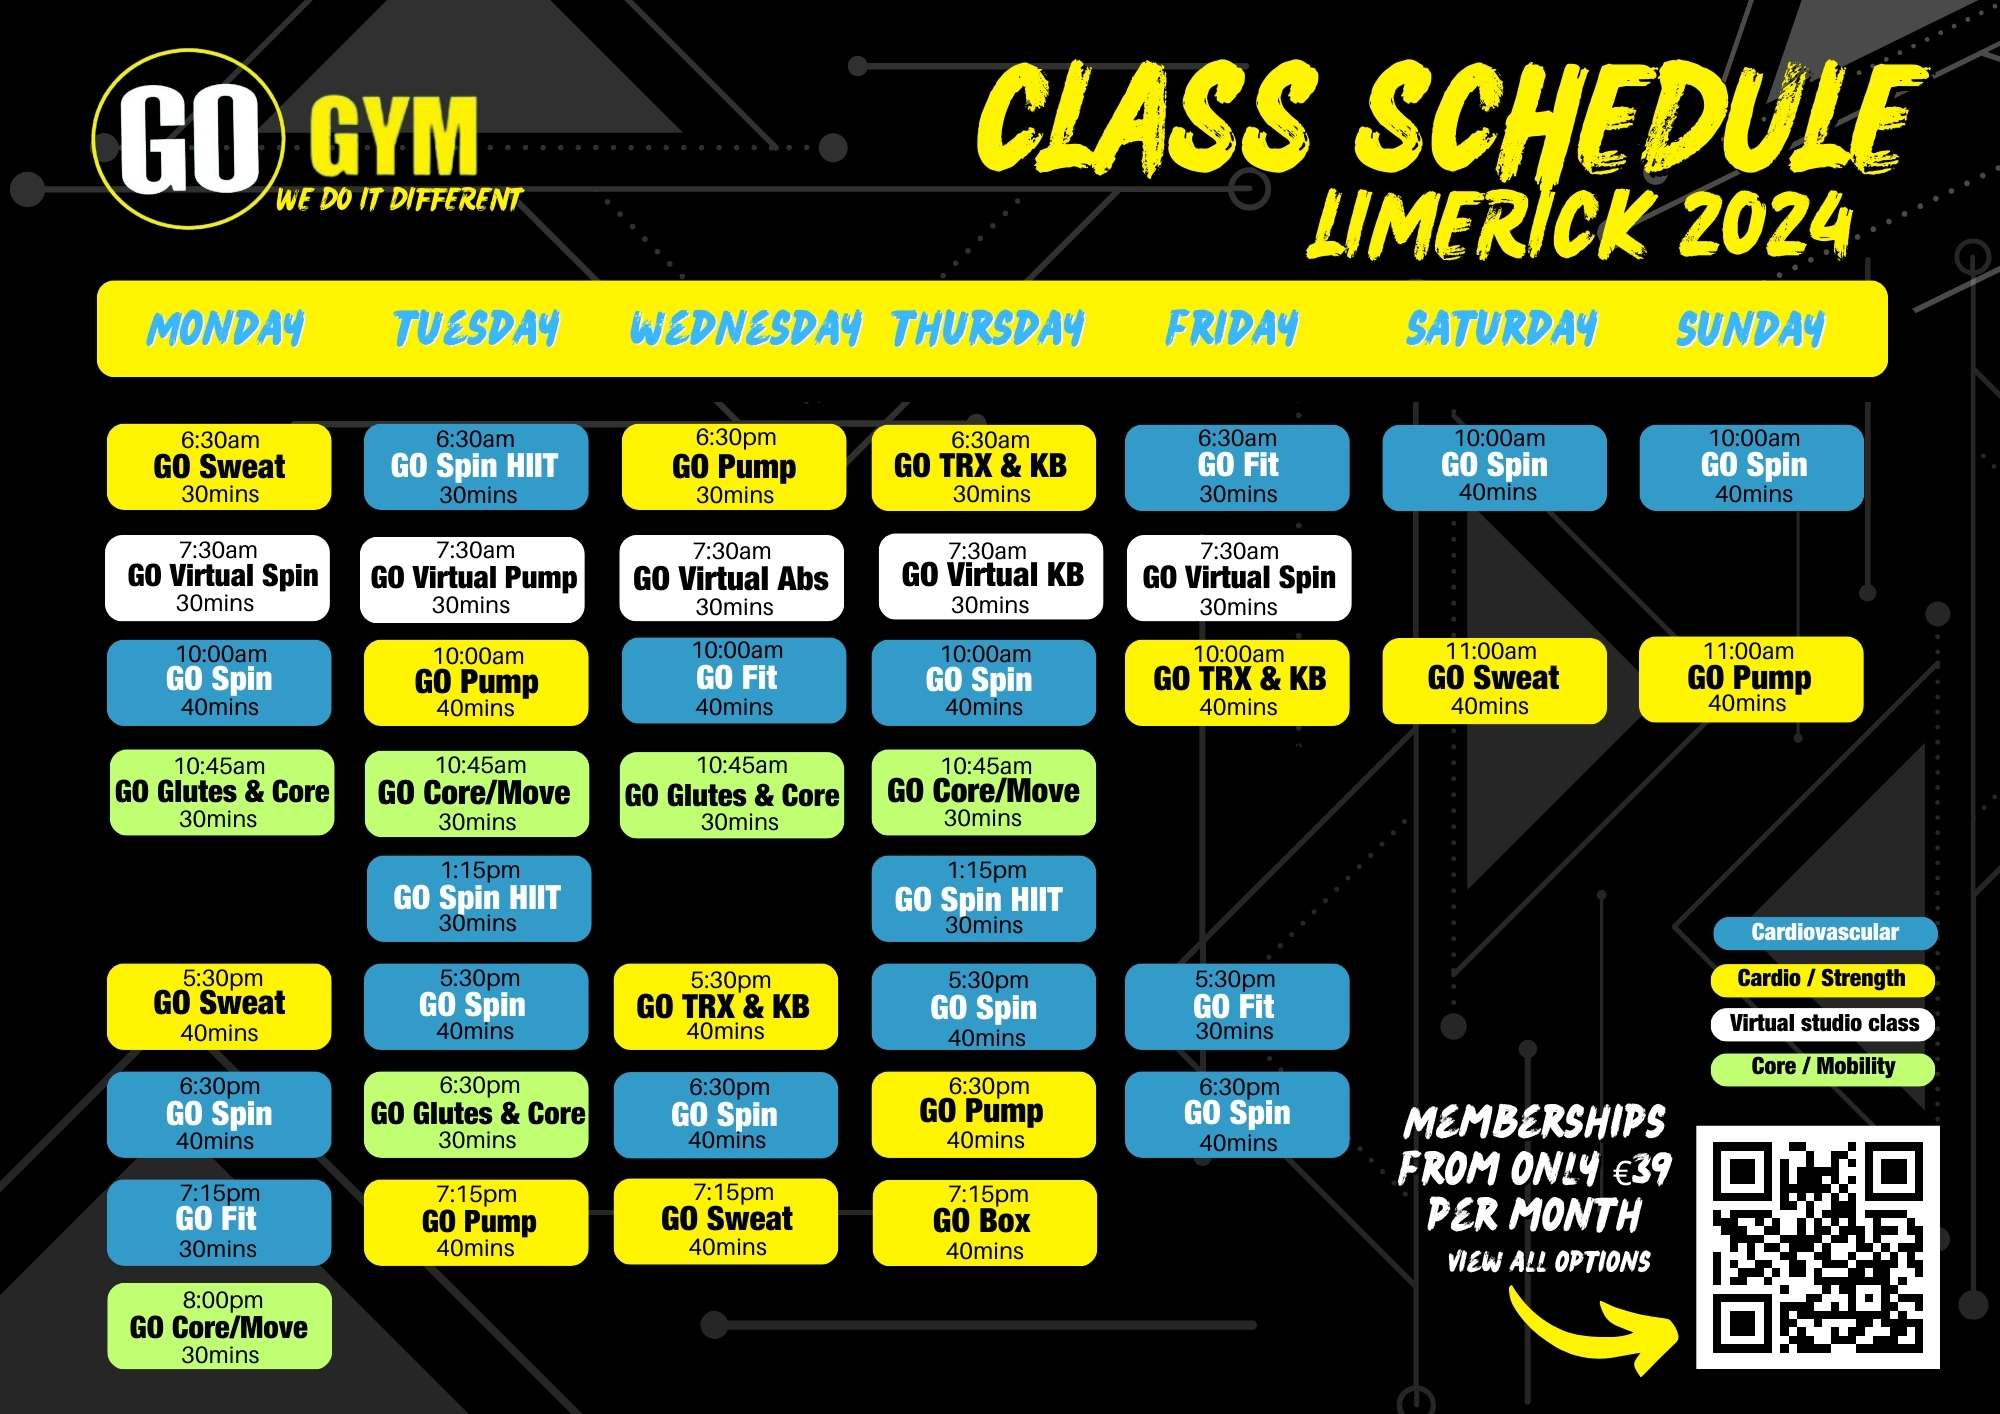 Limerick fitness classes